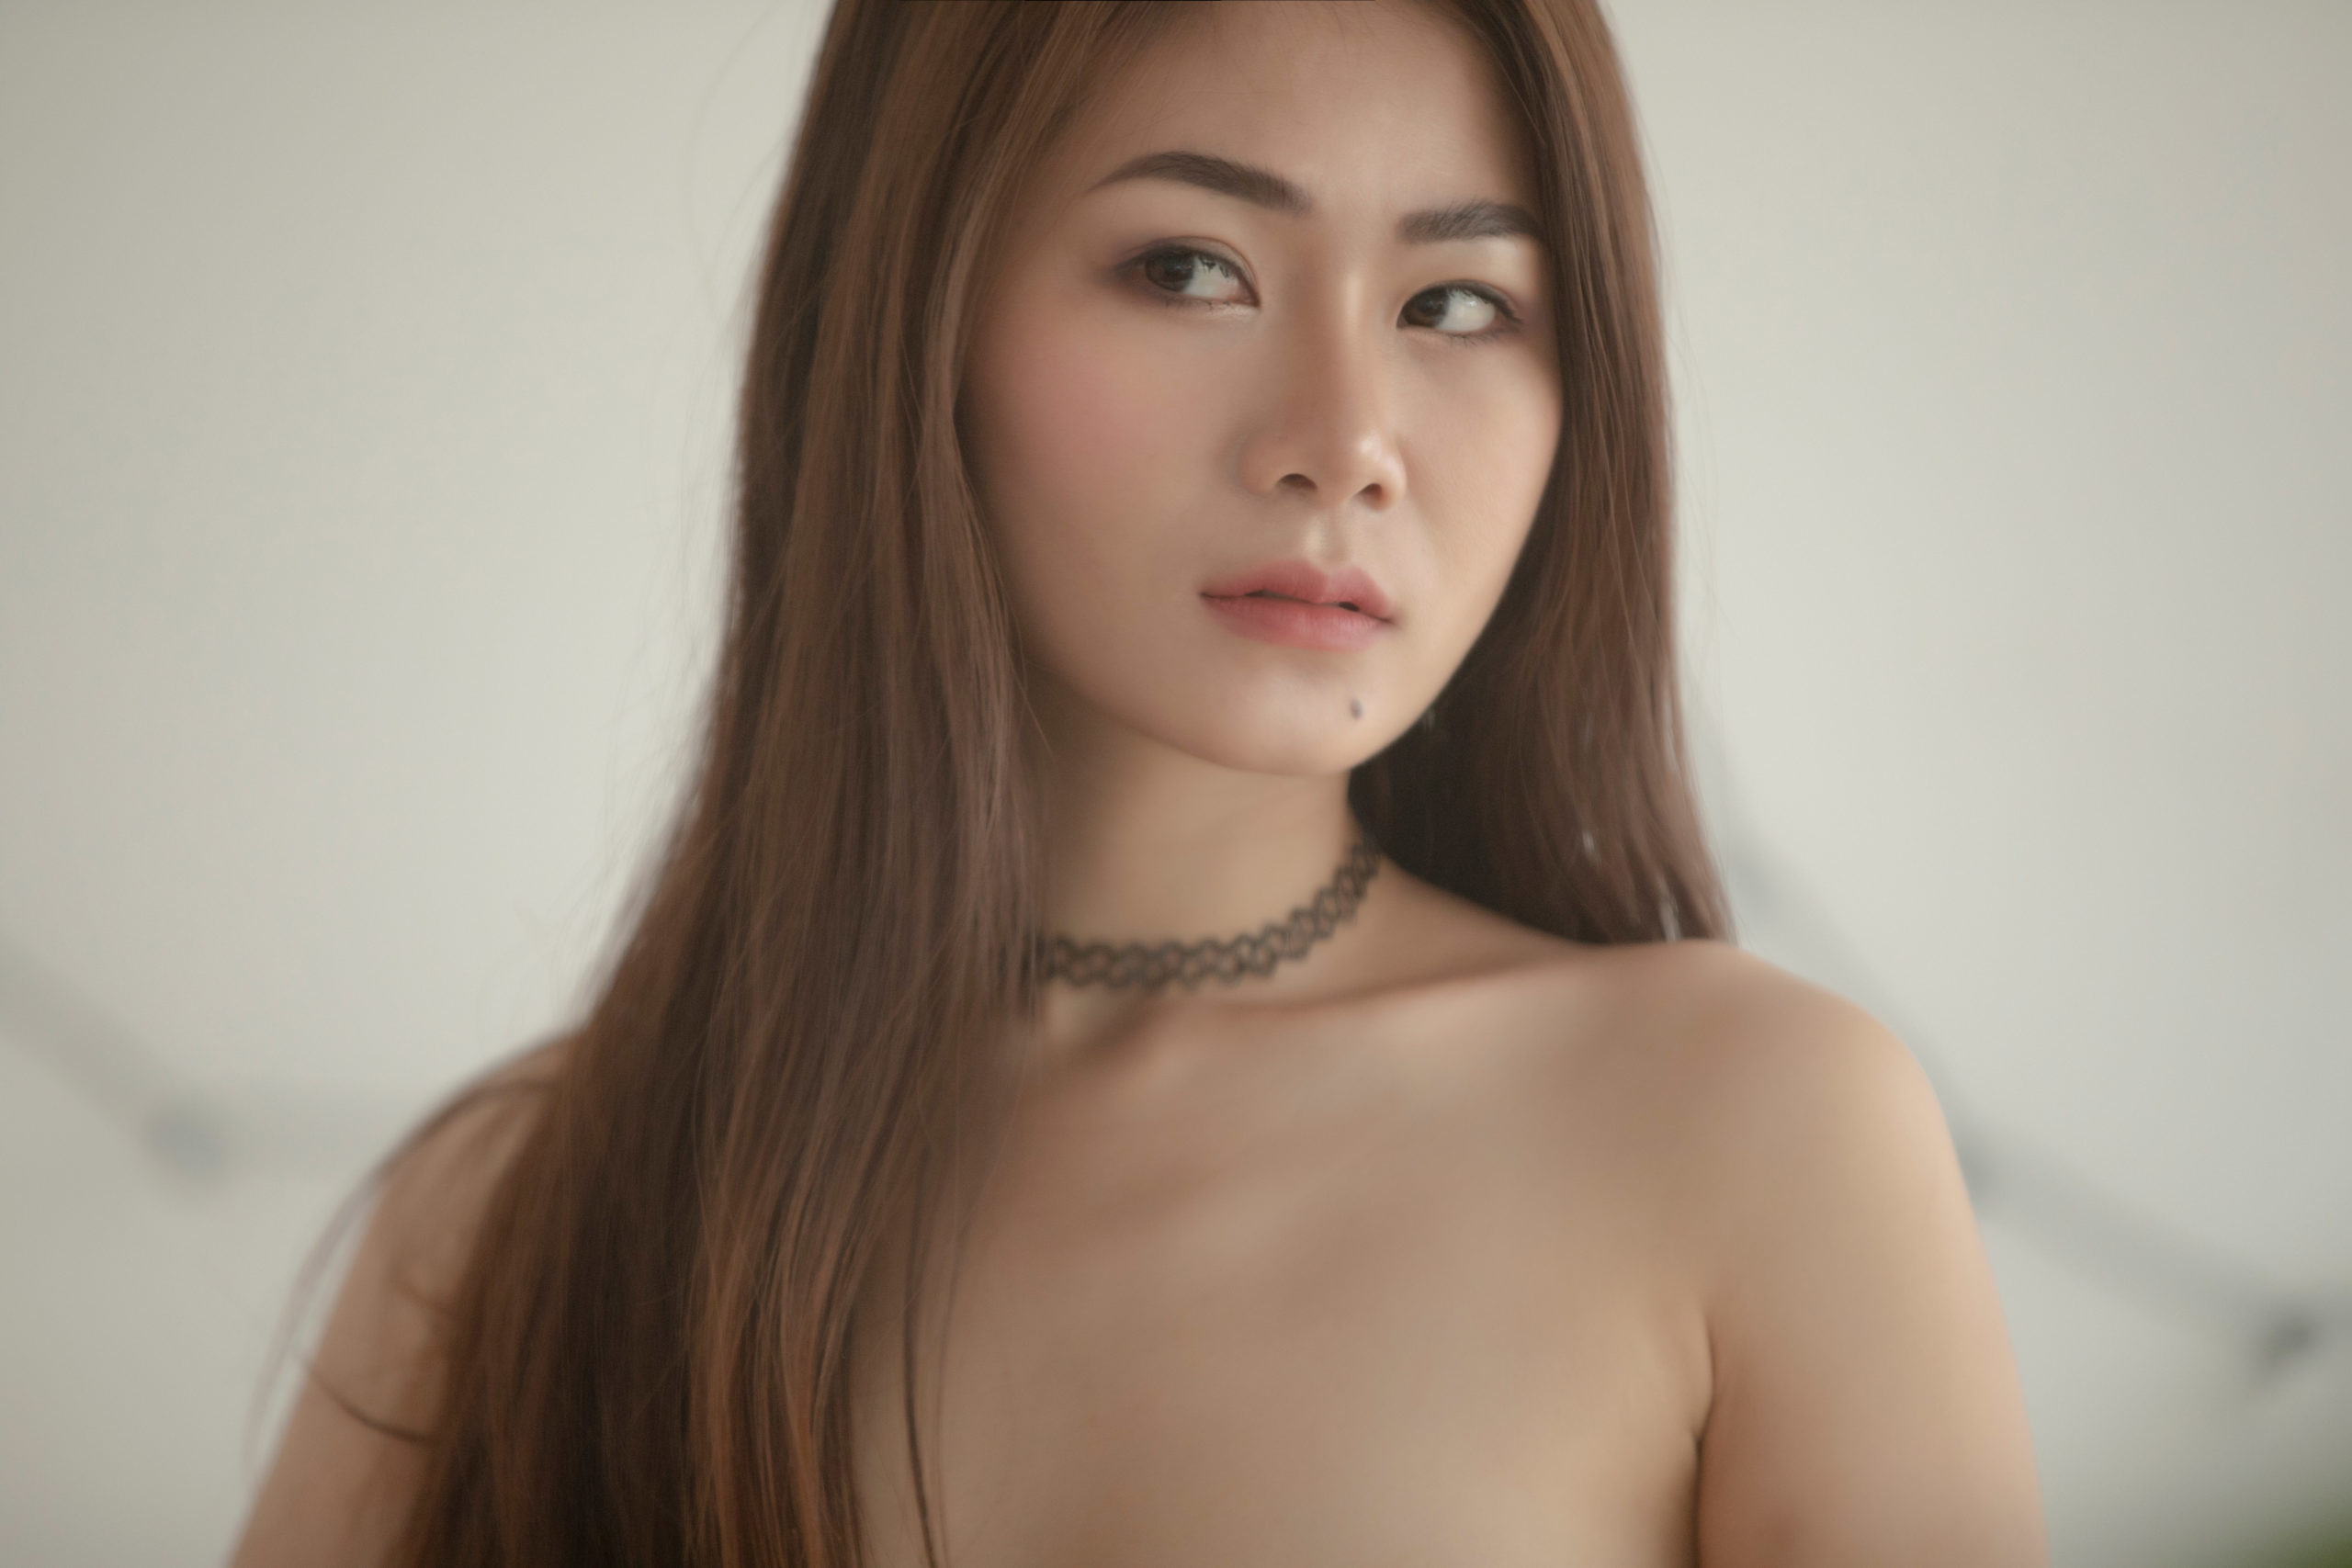 Linny Nguyen Nguoi Mau Anh Nude 9 scaled nudevn.com Linny Nguyễn